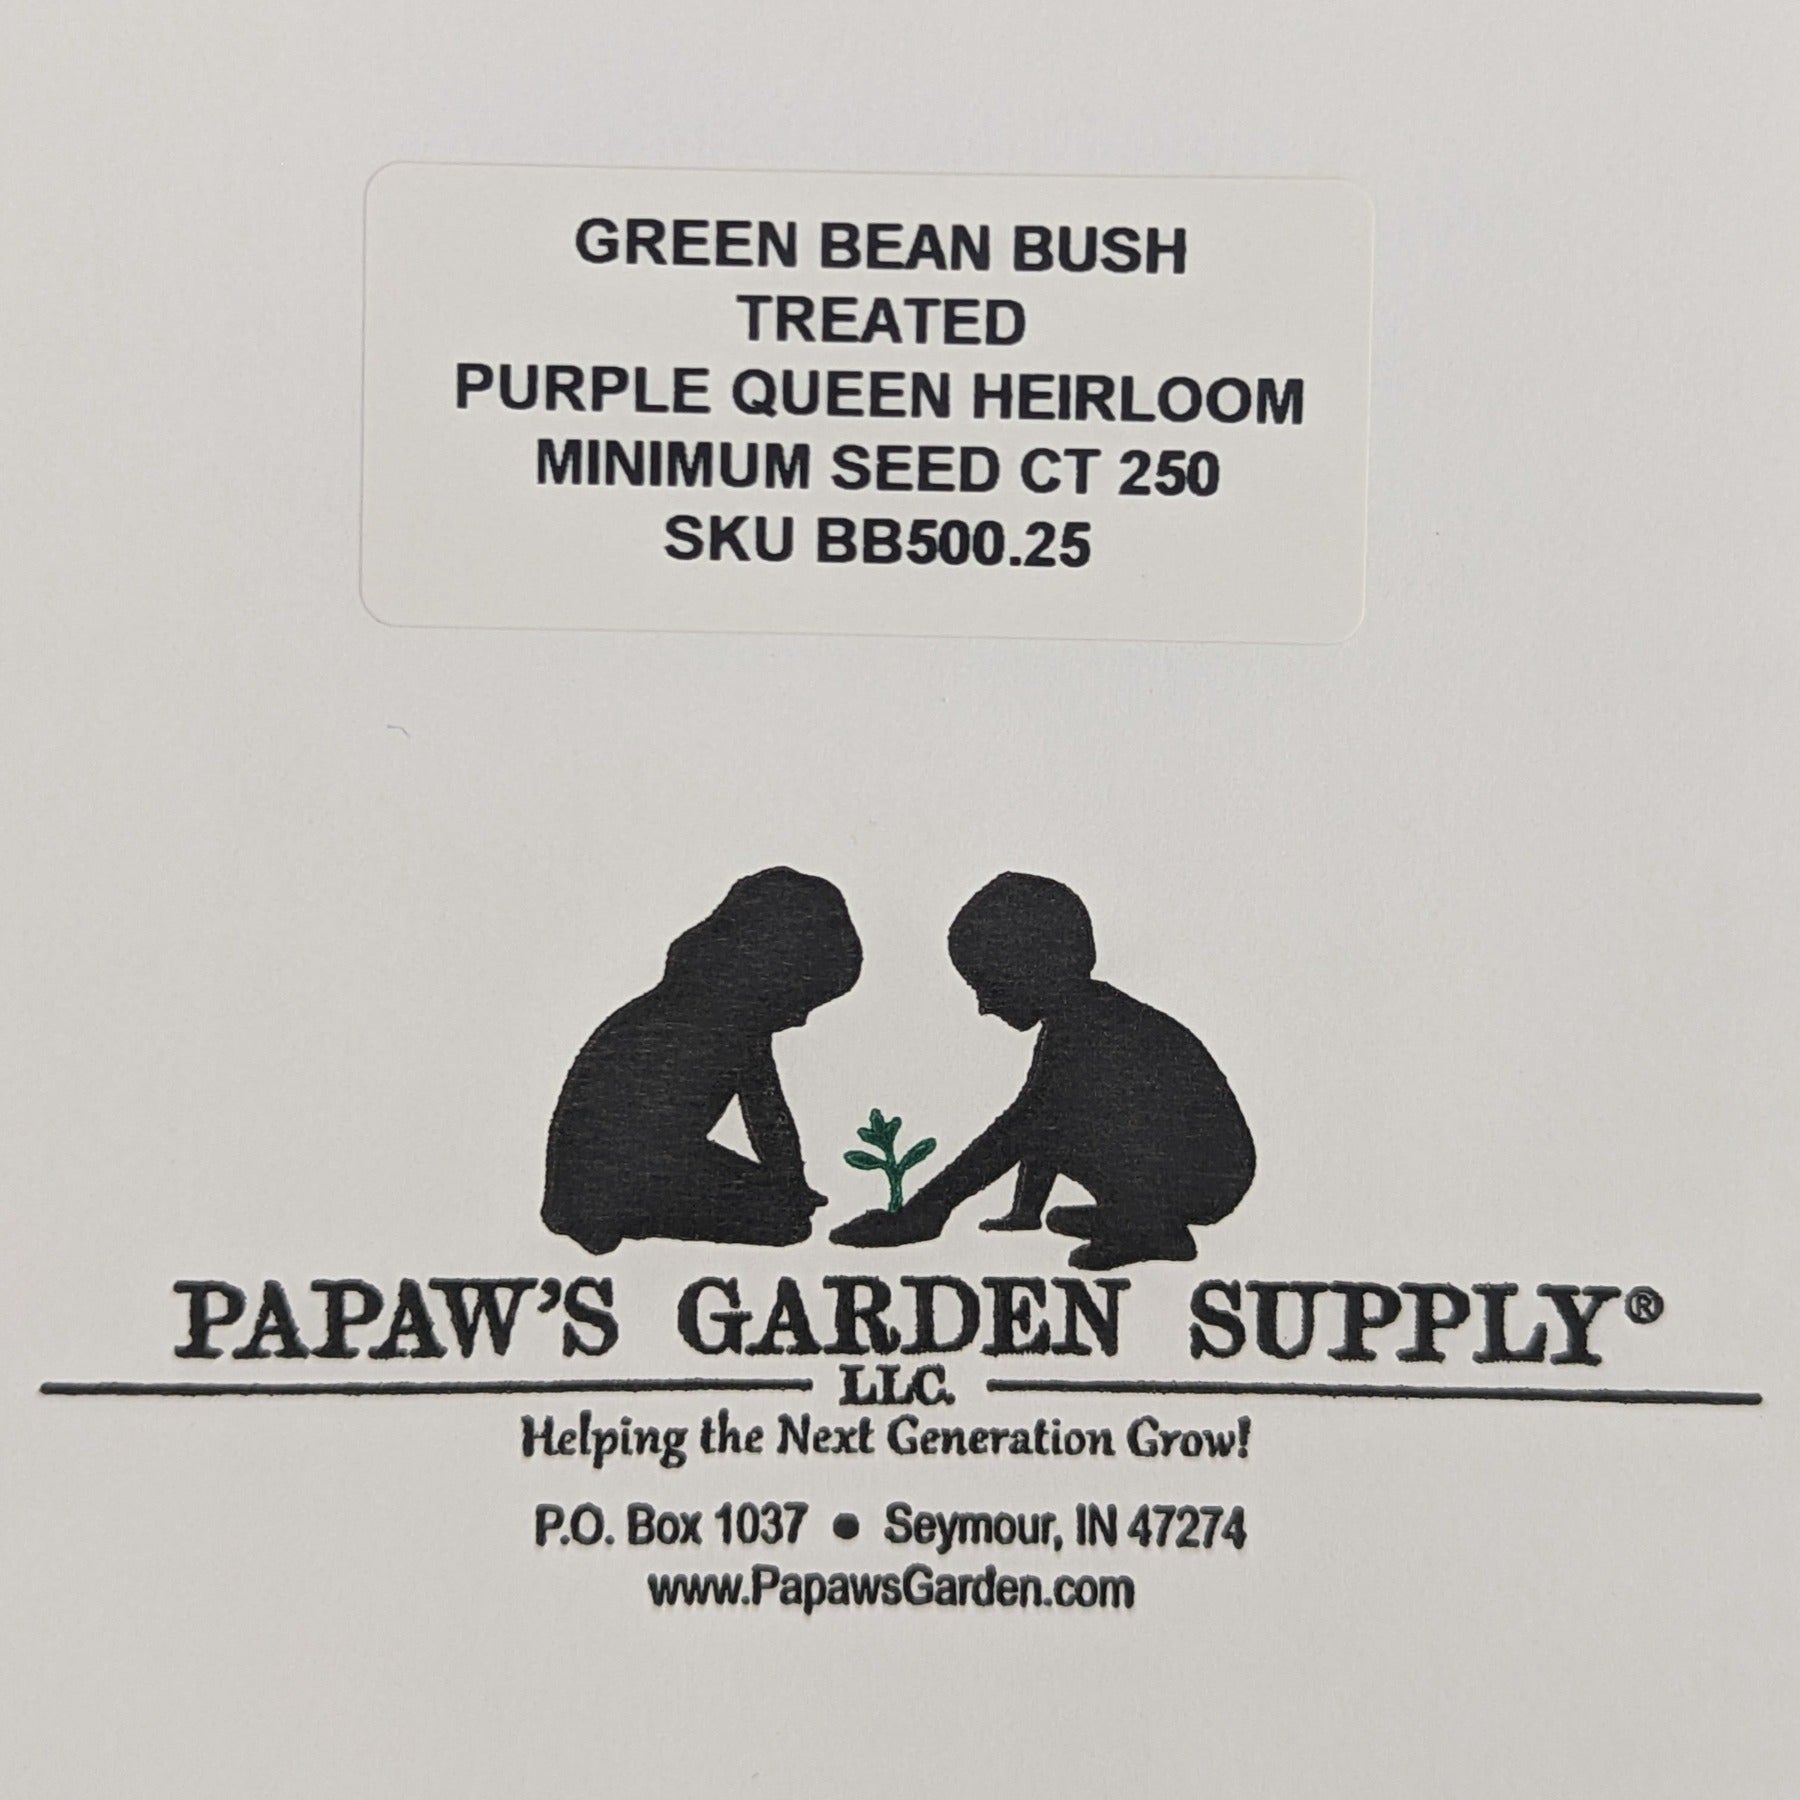 Purple Queen Heirloom Bush Green Bean Treated Seeds